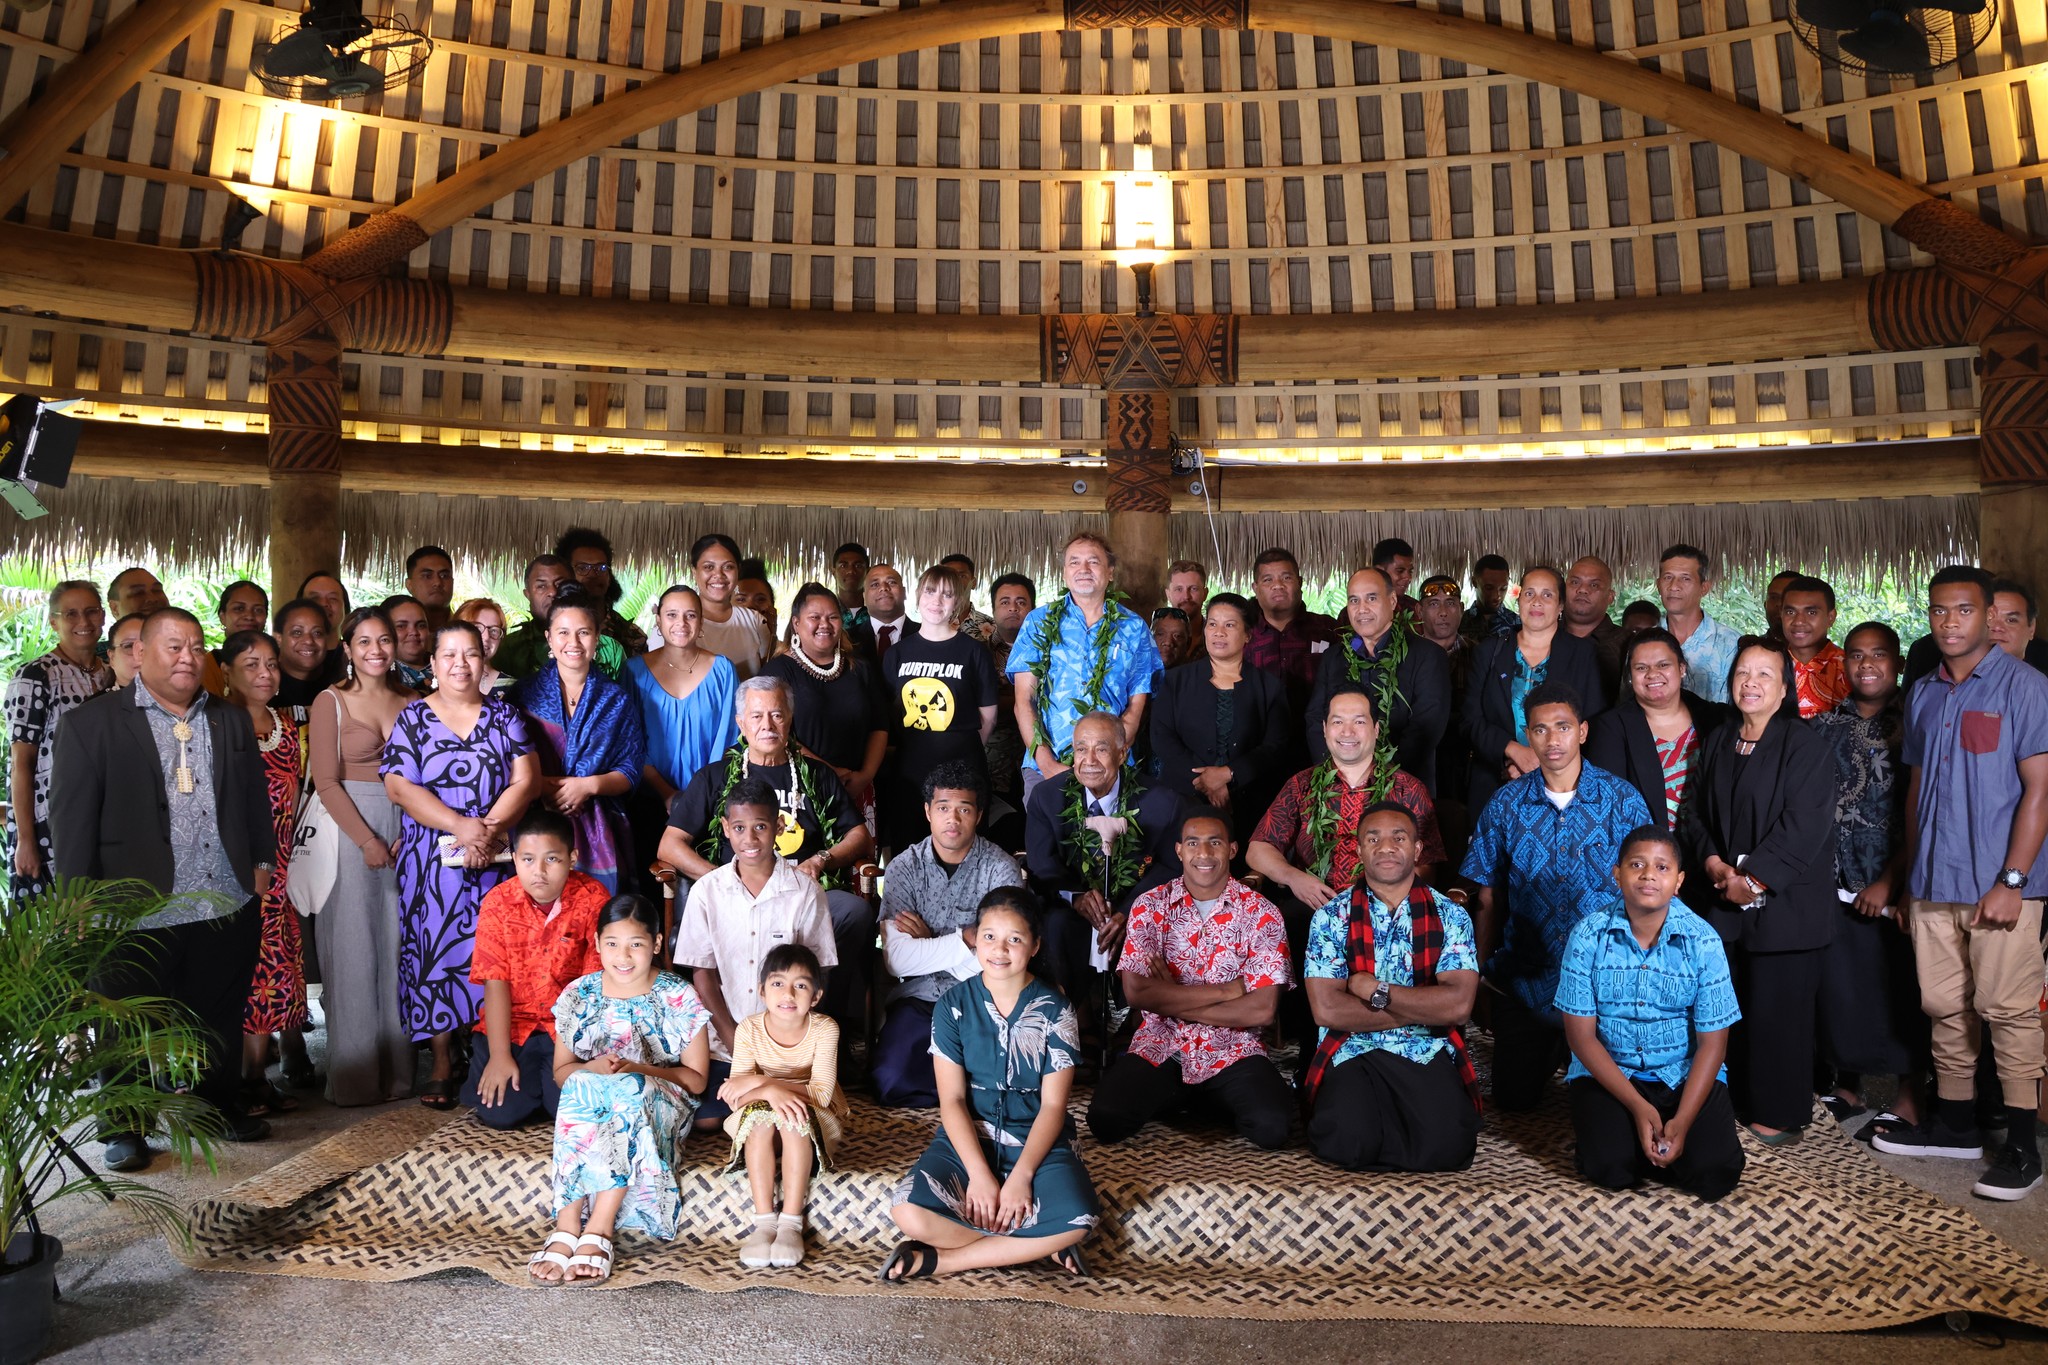 Upholding the provisions of the Rarotonga Treaty